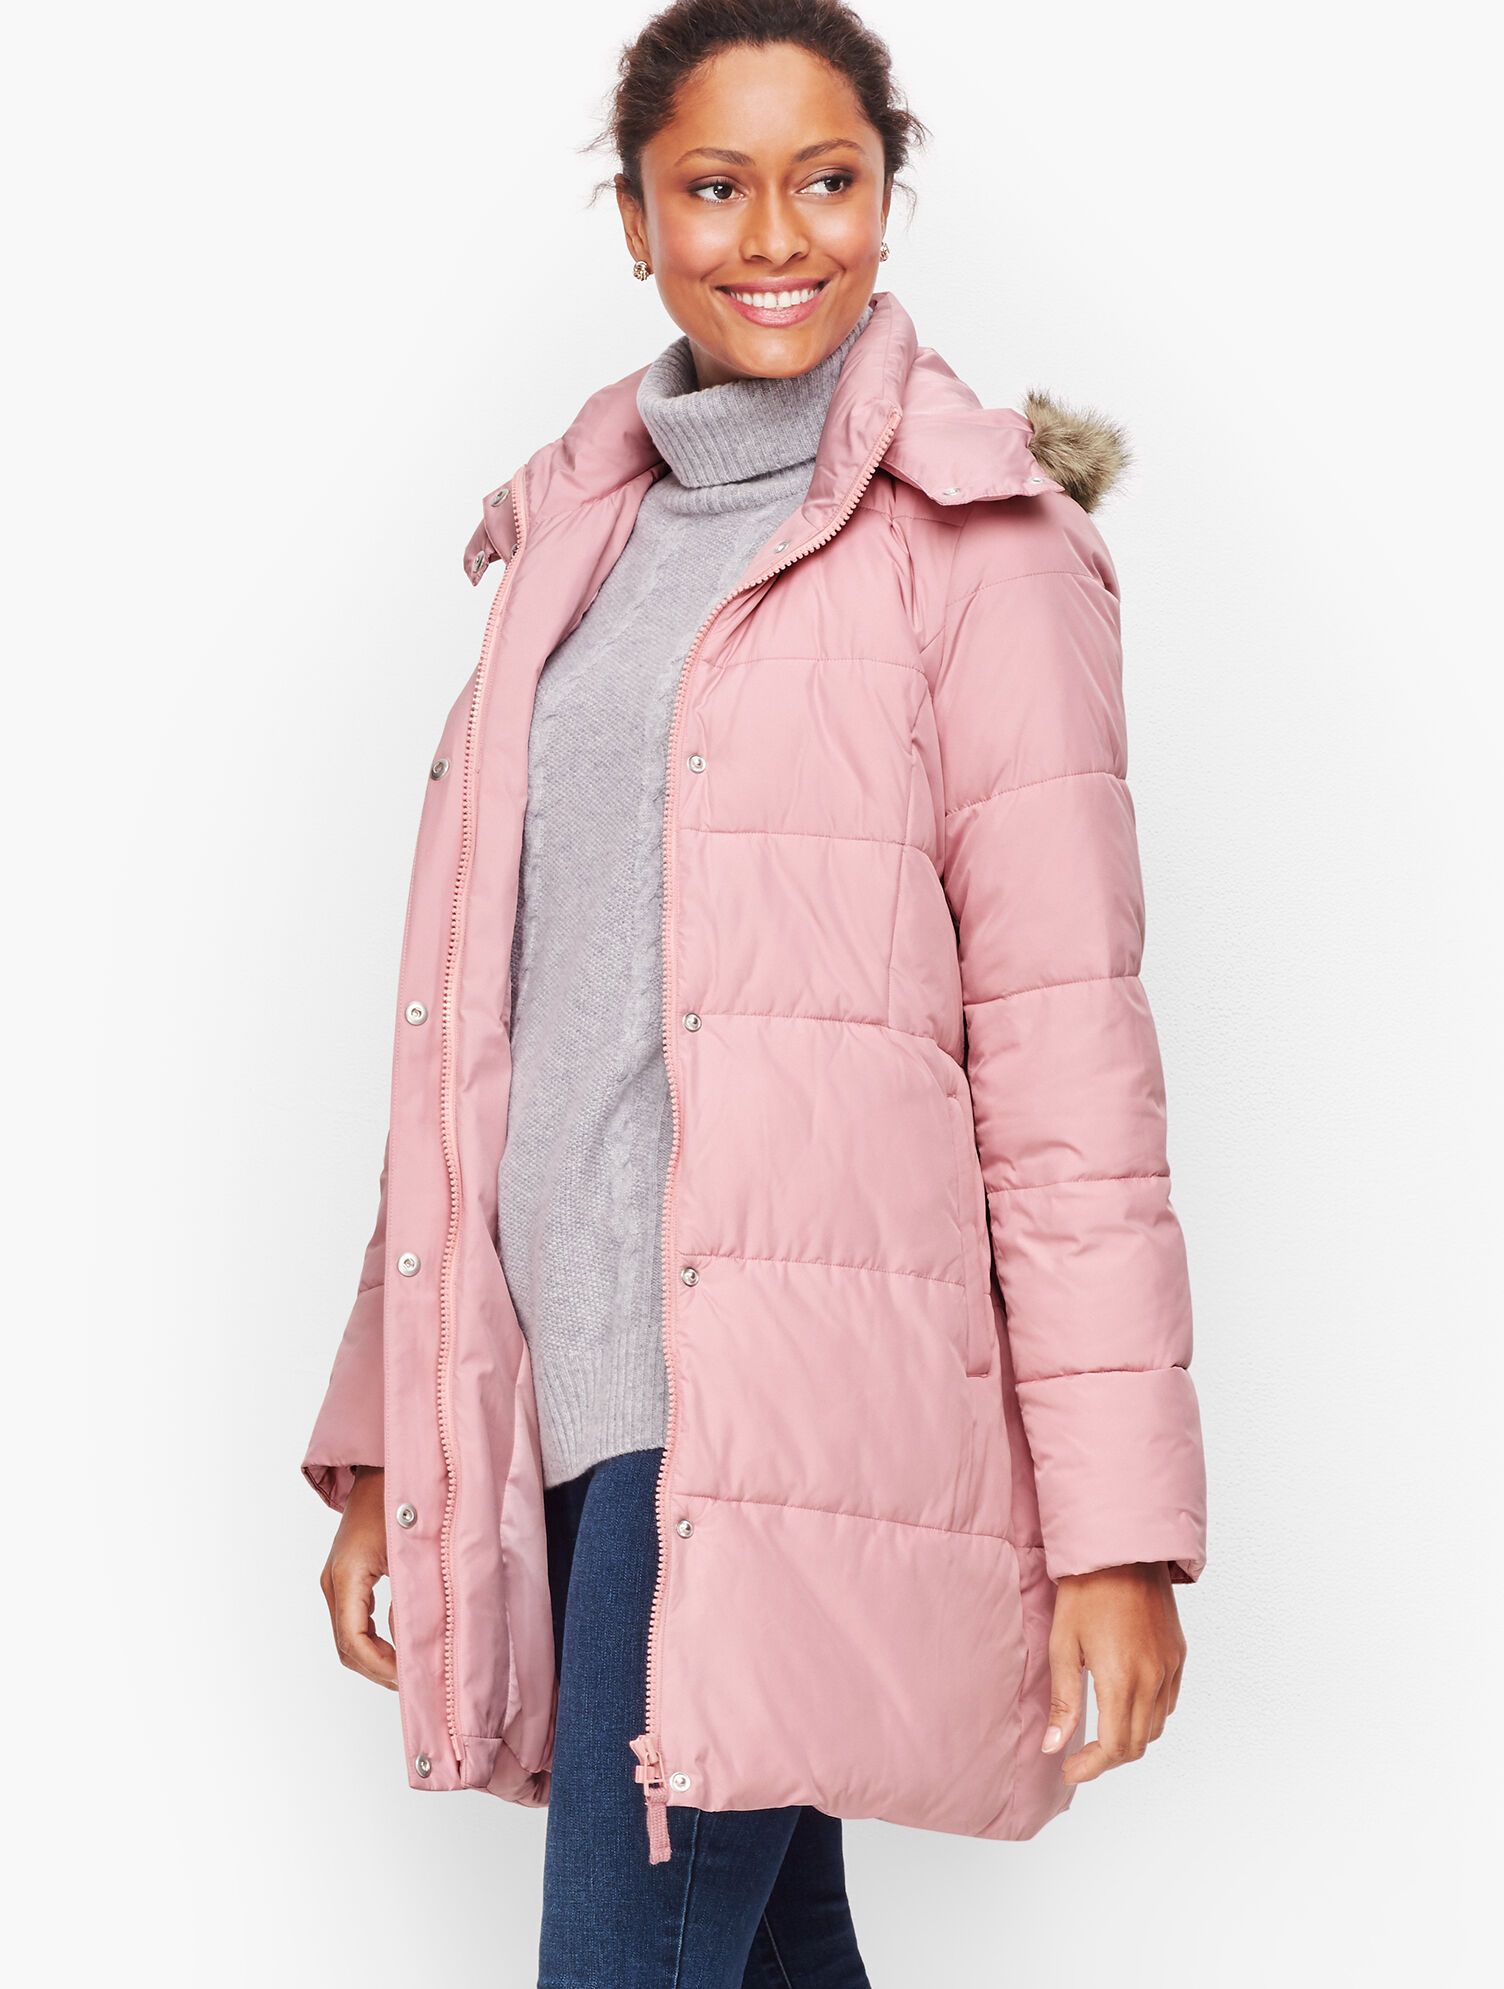 Pink Padded Coat With Fur Hood Flash Sales | bellvalefarms.com